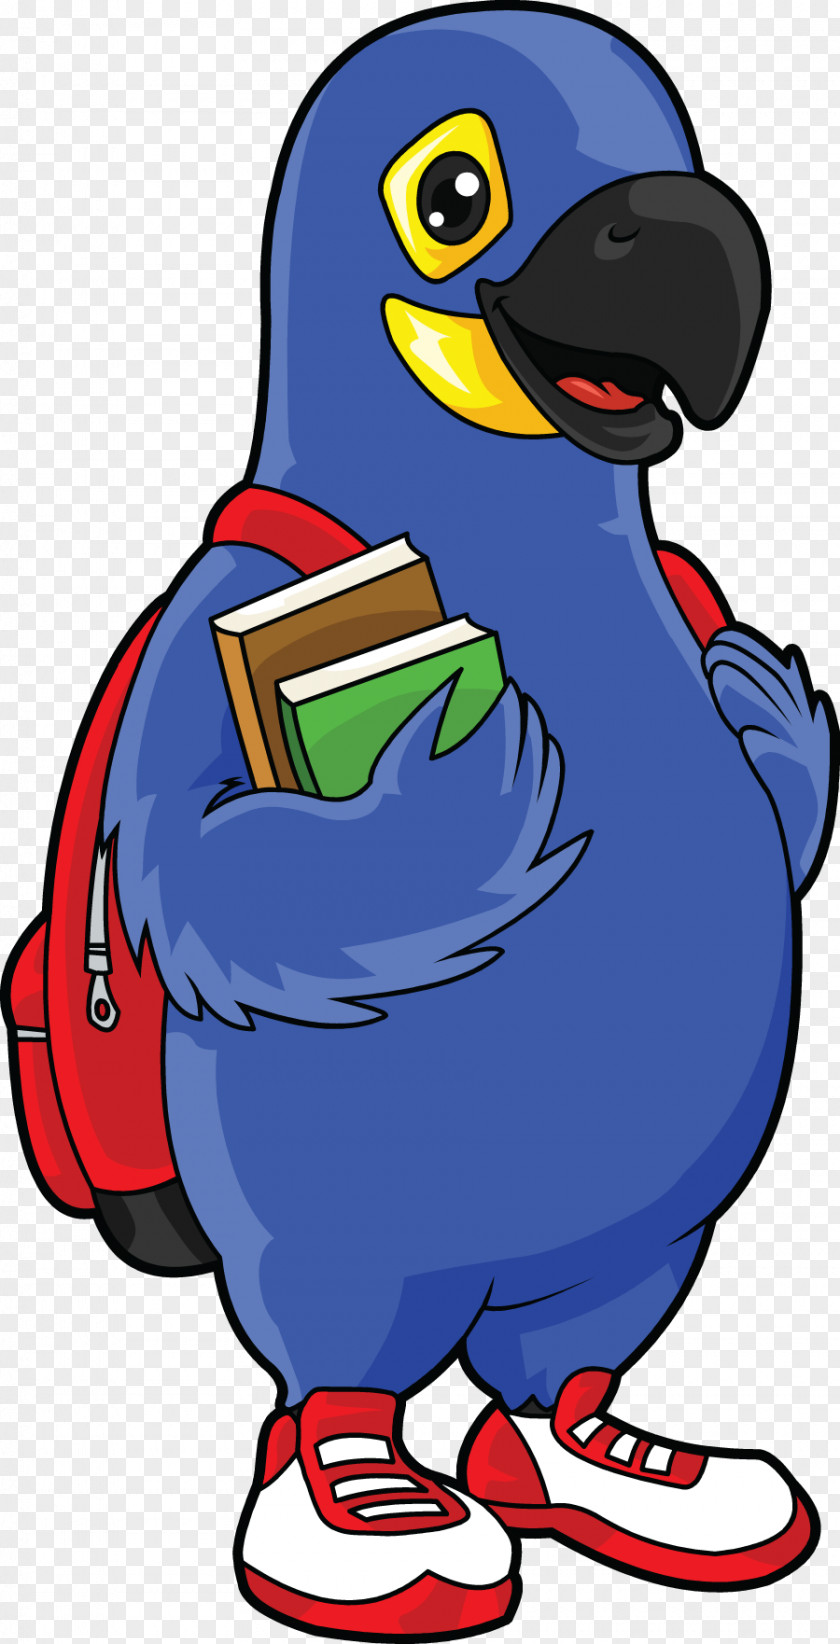 Blue Parrot Spanish Schoolhouse Periquito Azul Language Immersion PNG